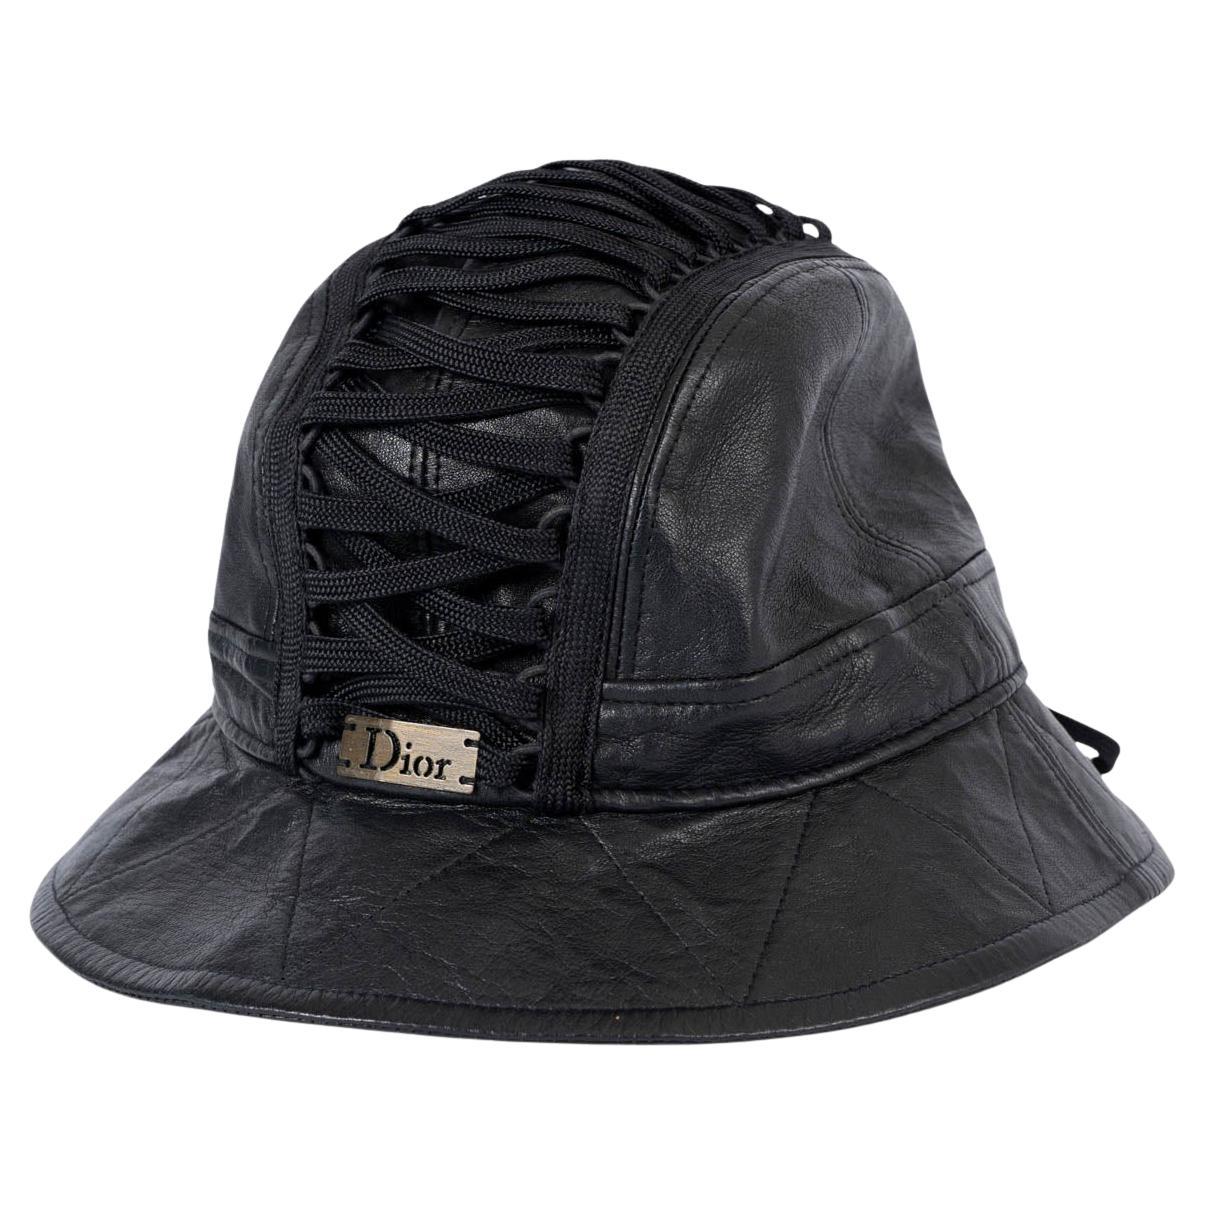 CHRISTIAN DIOR black leather VINTAGE CORSET BUCKET Hat 57 For Sale